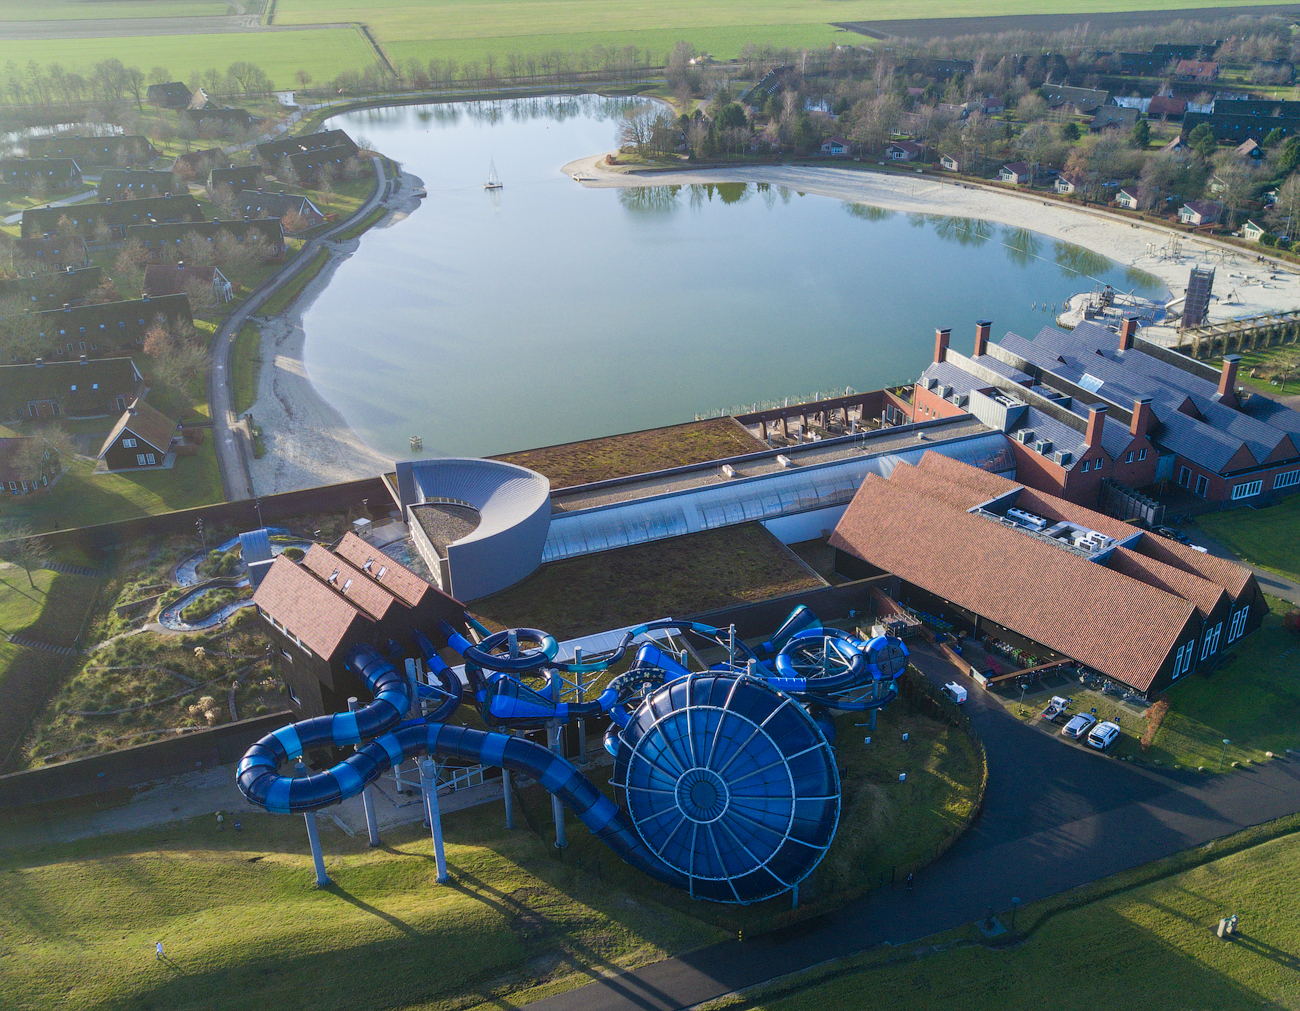 Indoor water park - My, Landscape, The photo, Aquapark, Quadcopter, Netherlands (Holland)